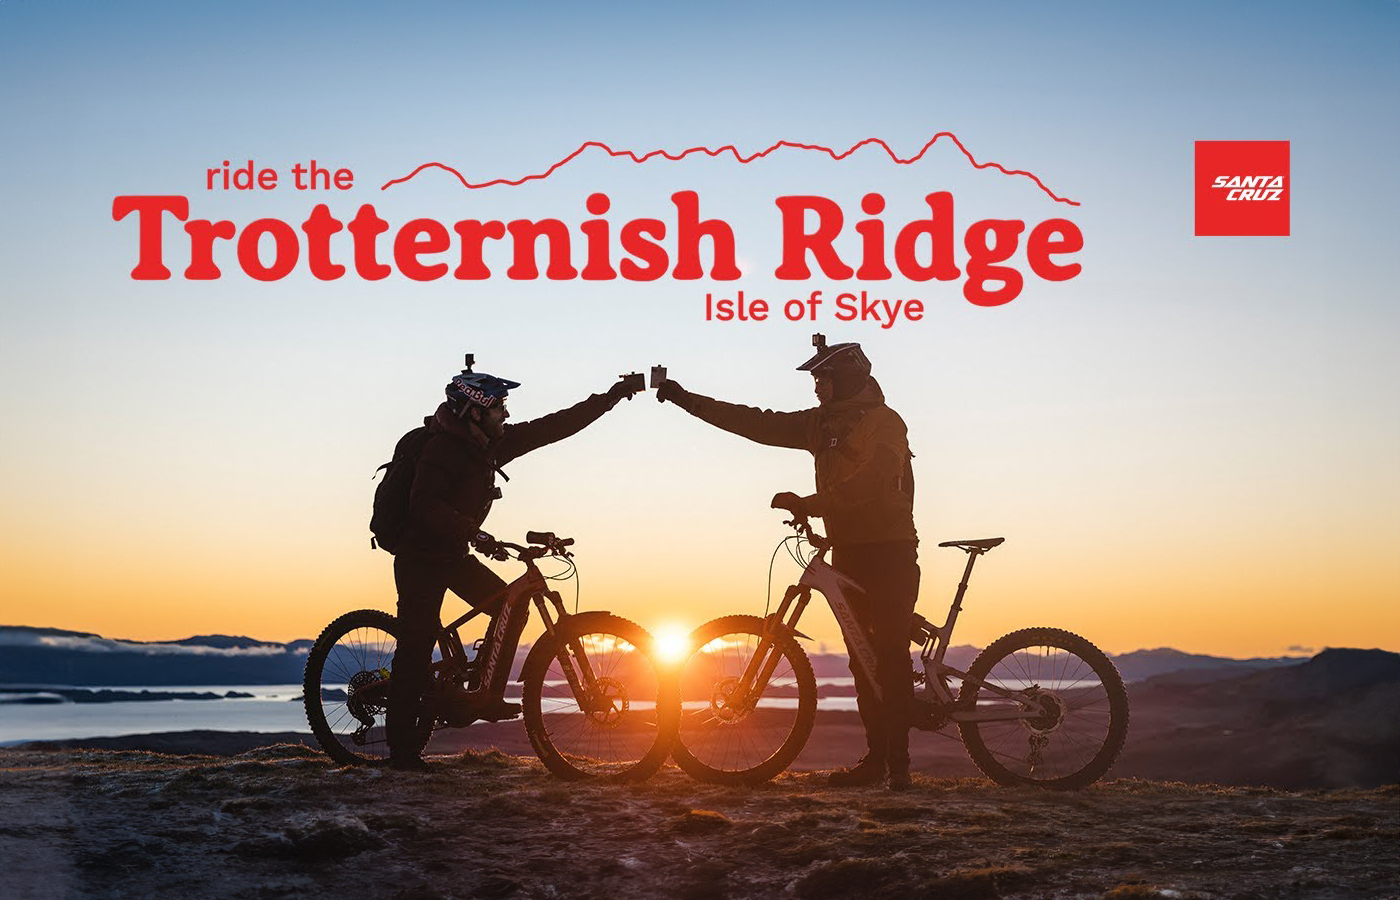 Danny MacAskill and Steve Peat ride the Trotternish Ridge in the Isle of Skye